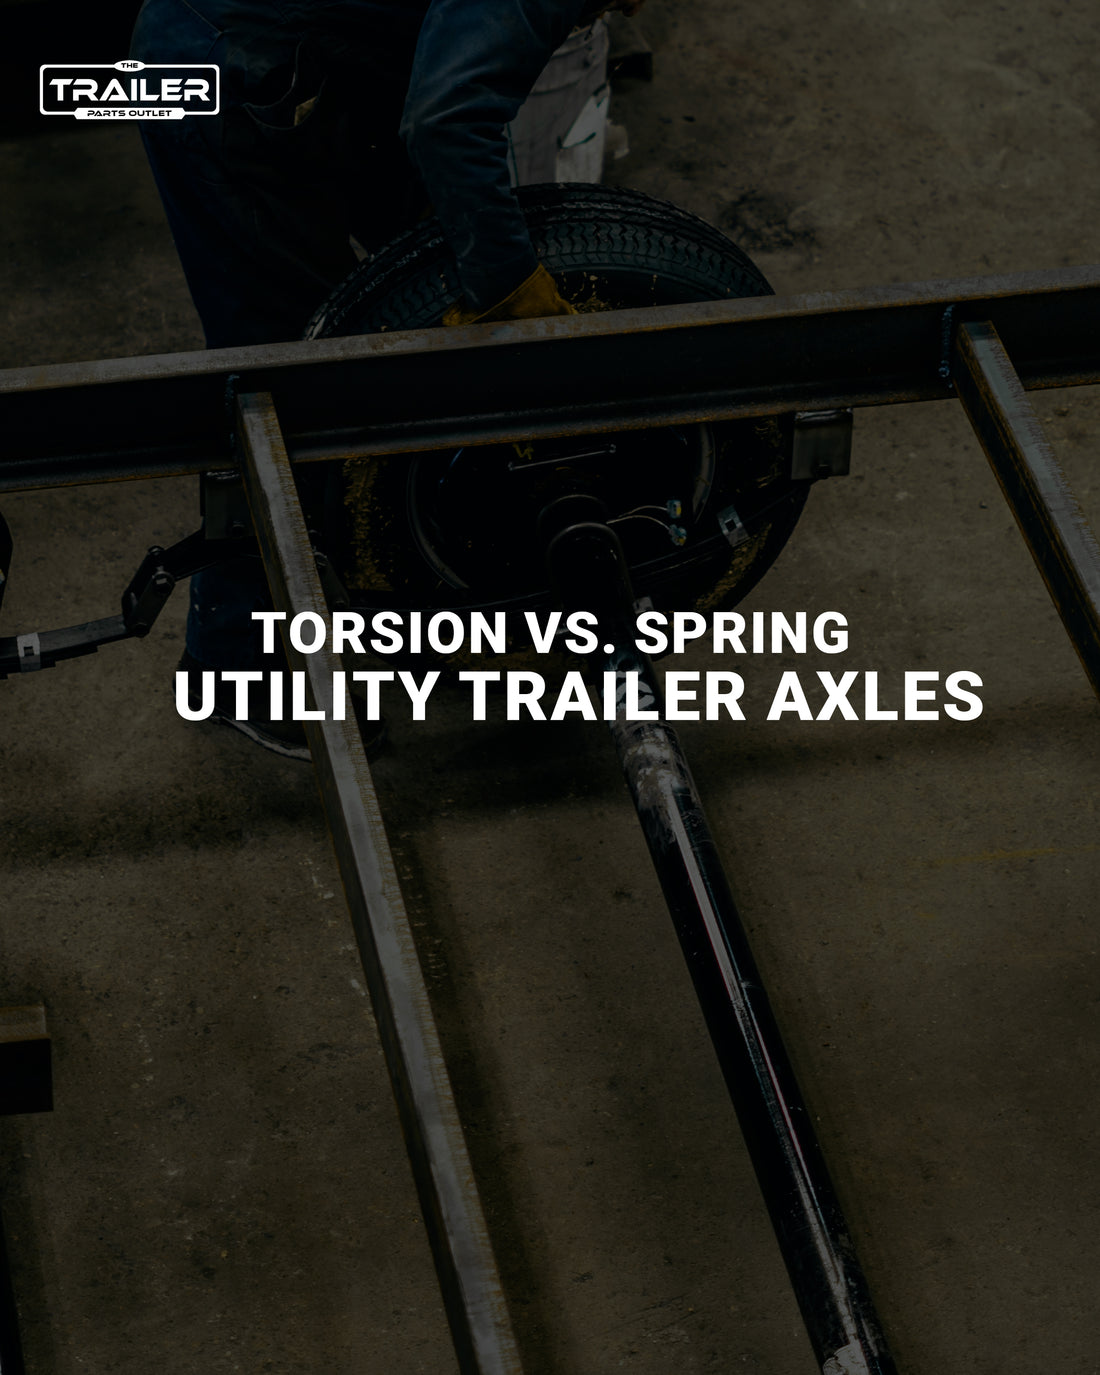 Torsion vs. Spring Utility Trailer Axles